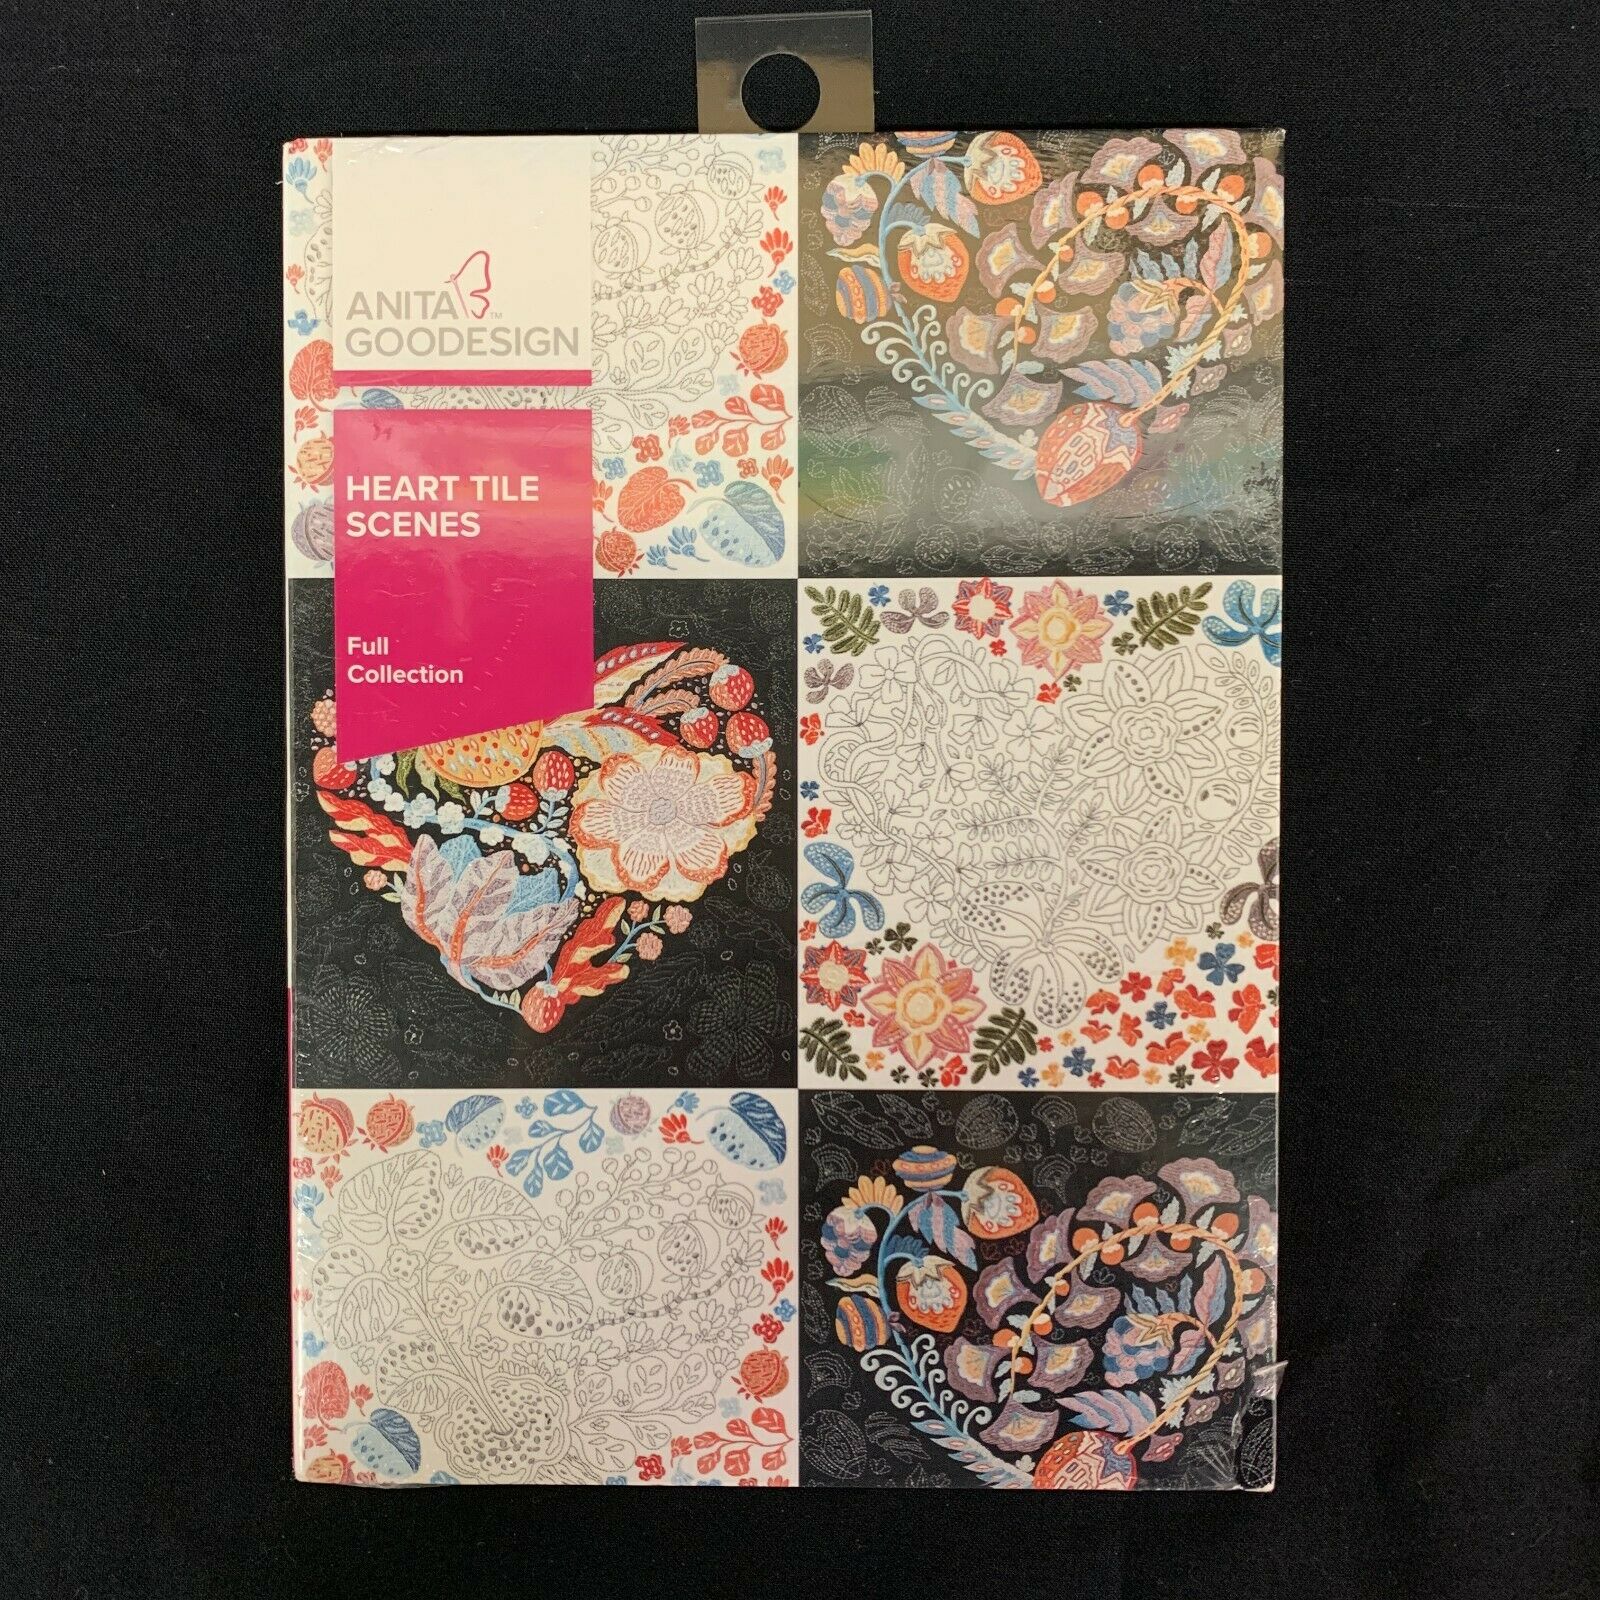 Anita Goodesign Heart Tile Scenes Full Collection New Sealed